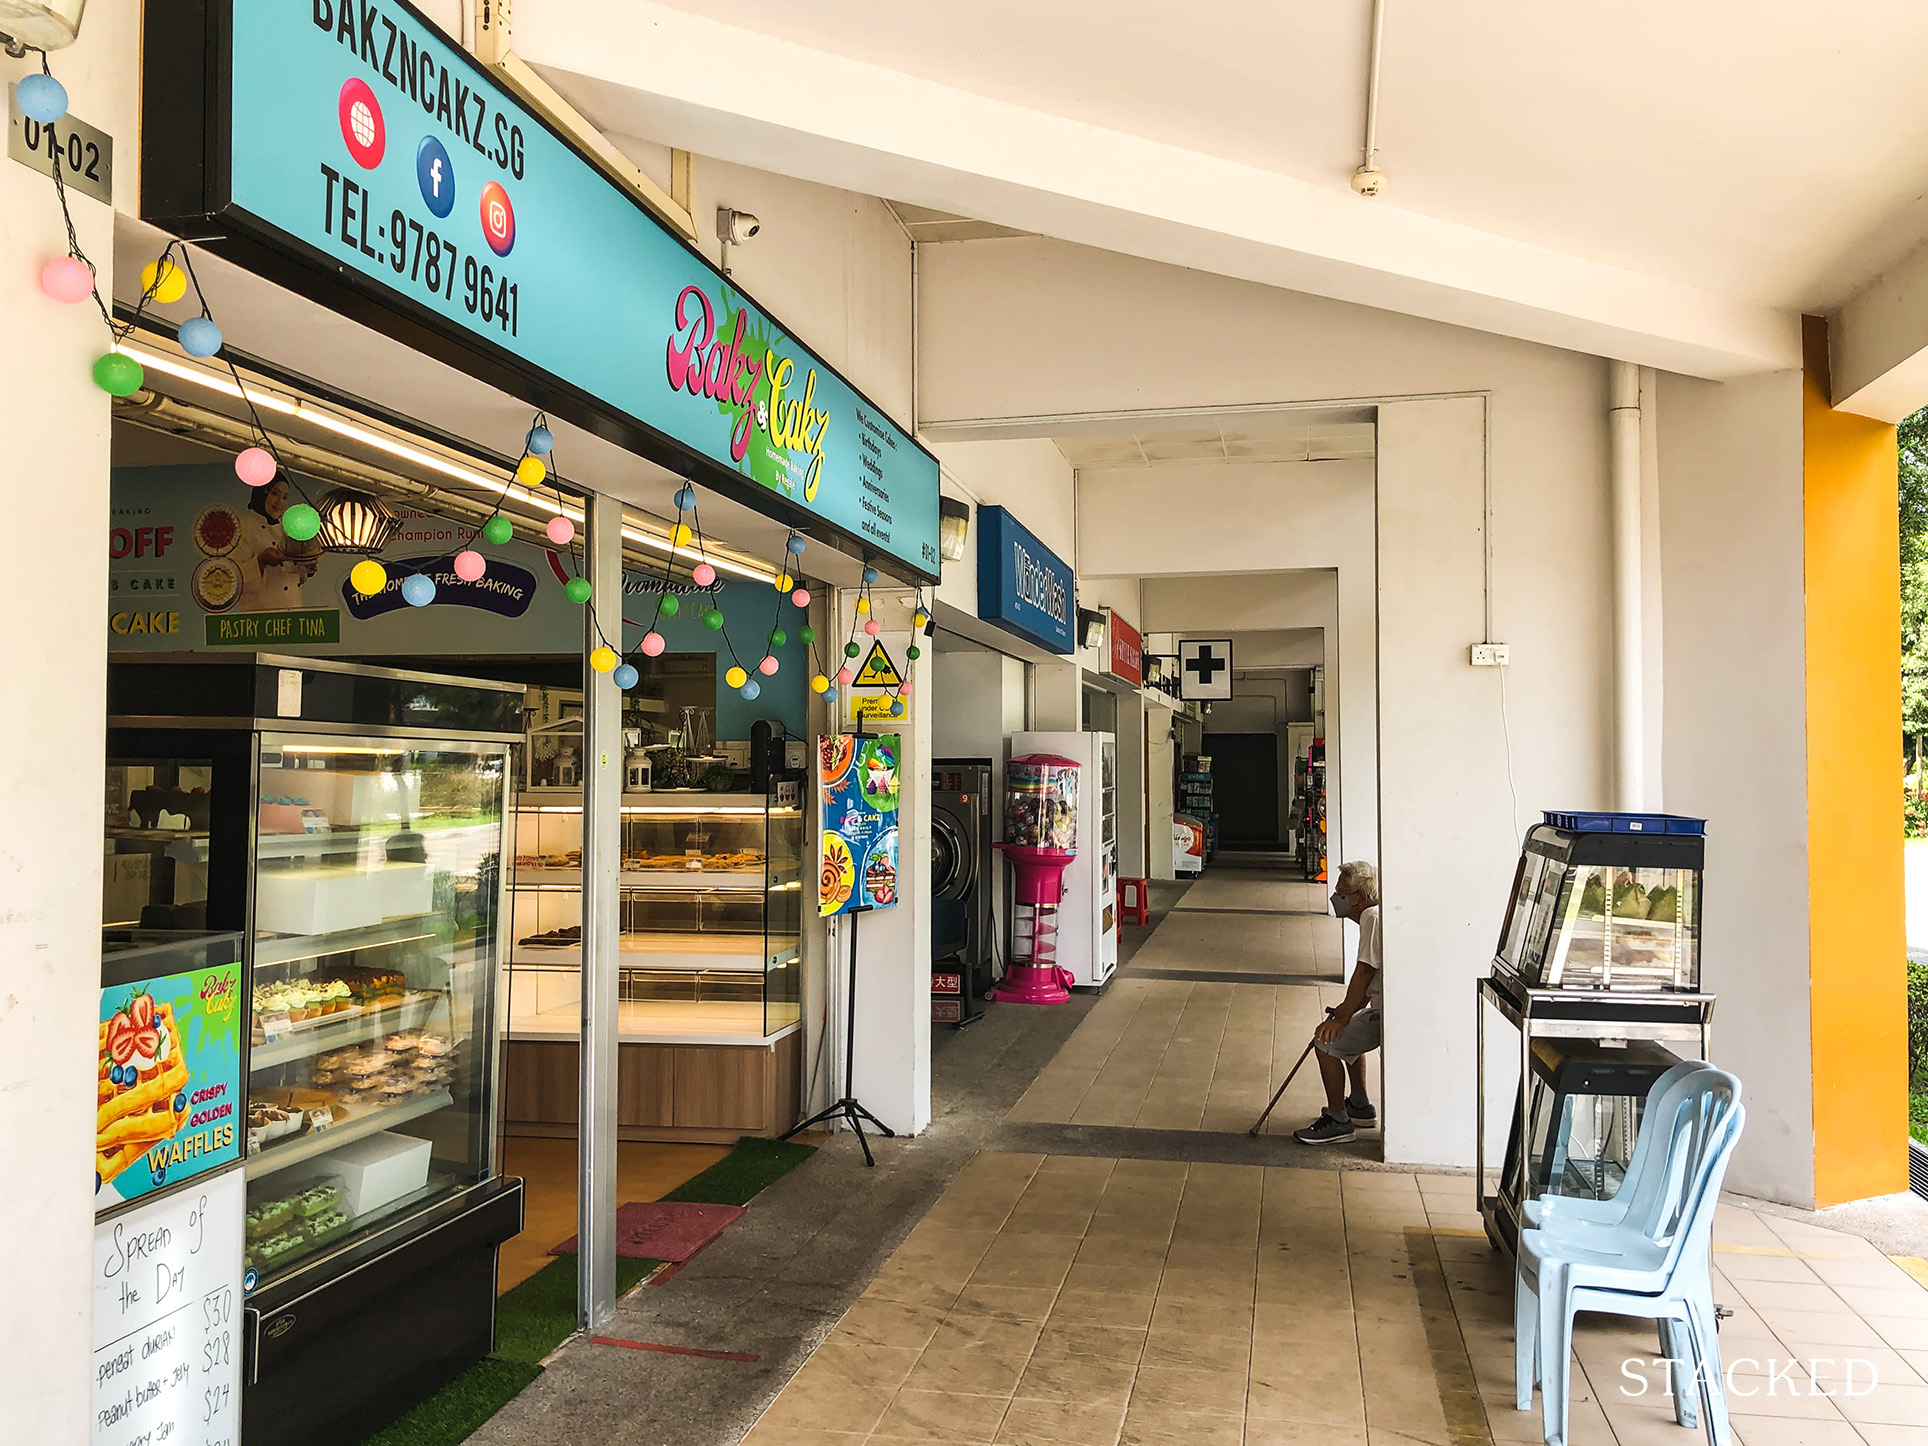 EastGlen @ Canberra 8 bakery